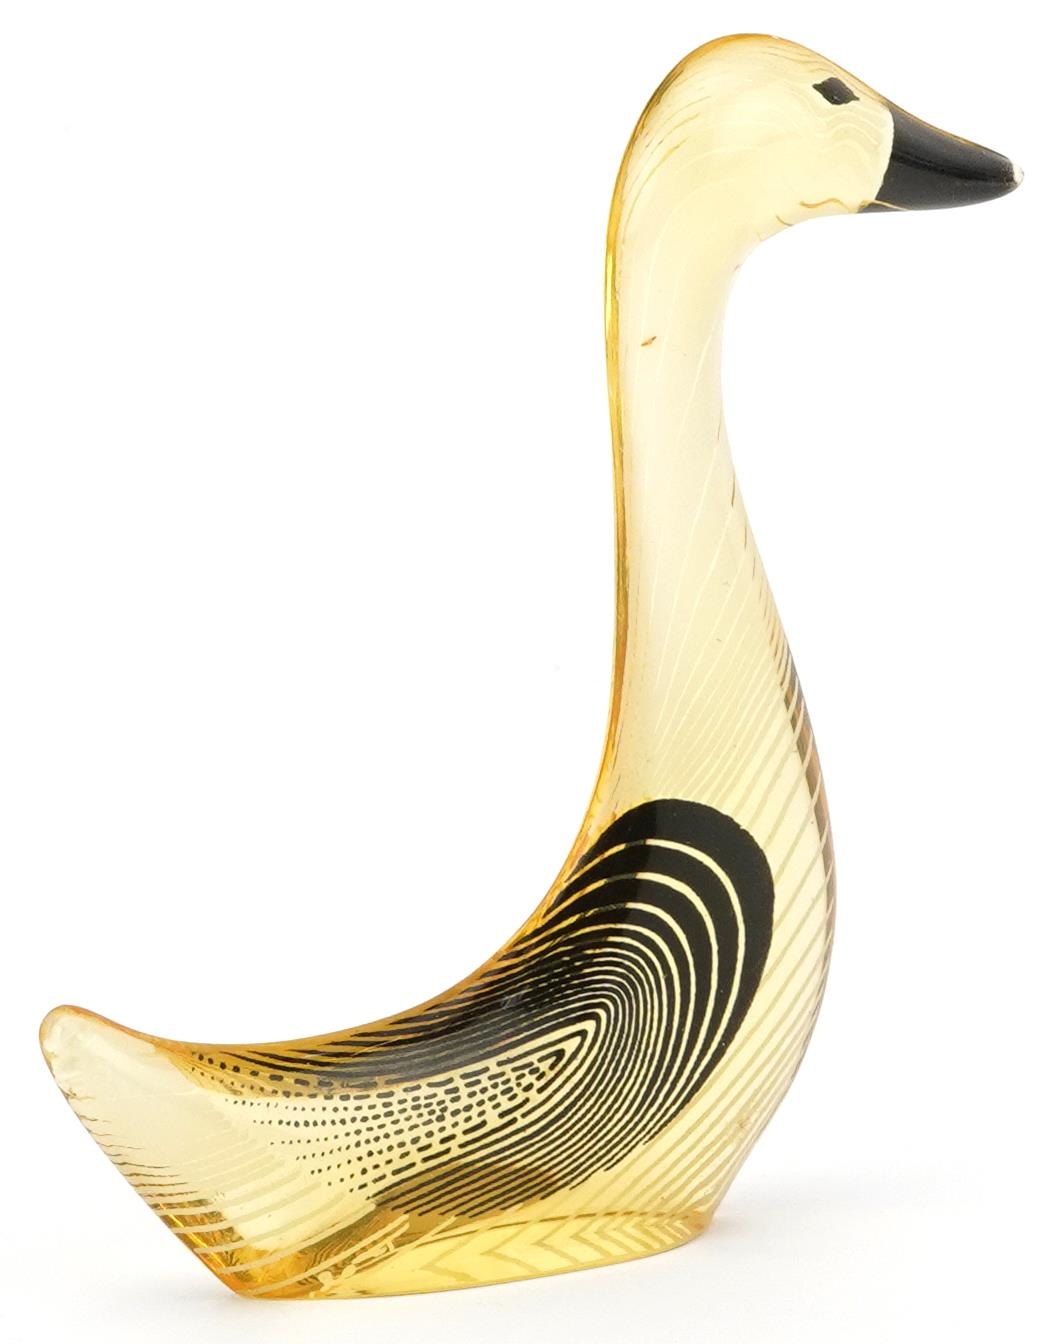 Attributed to Abraham Palatnik, Brazilian mid century Lucite duck, 10cm high - Image 2 of 4